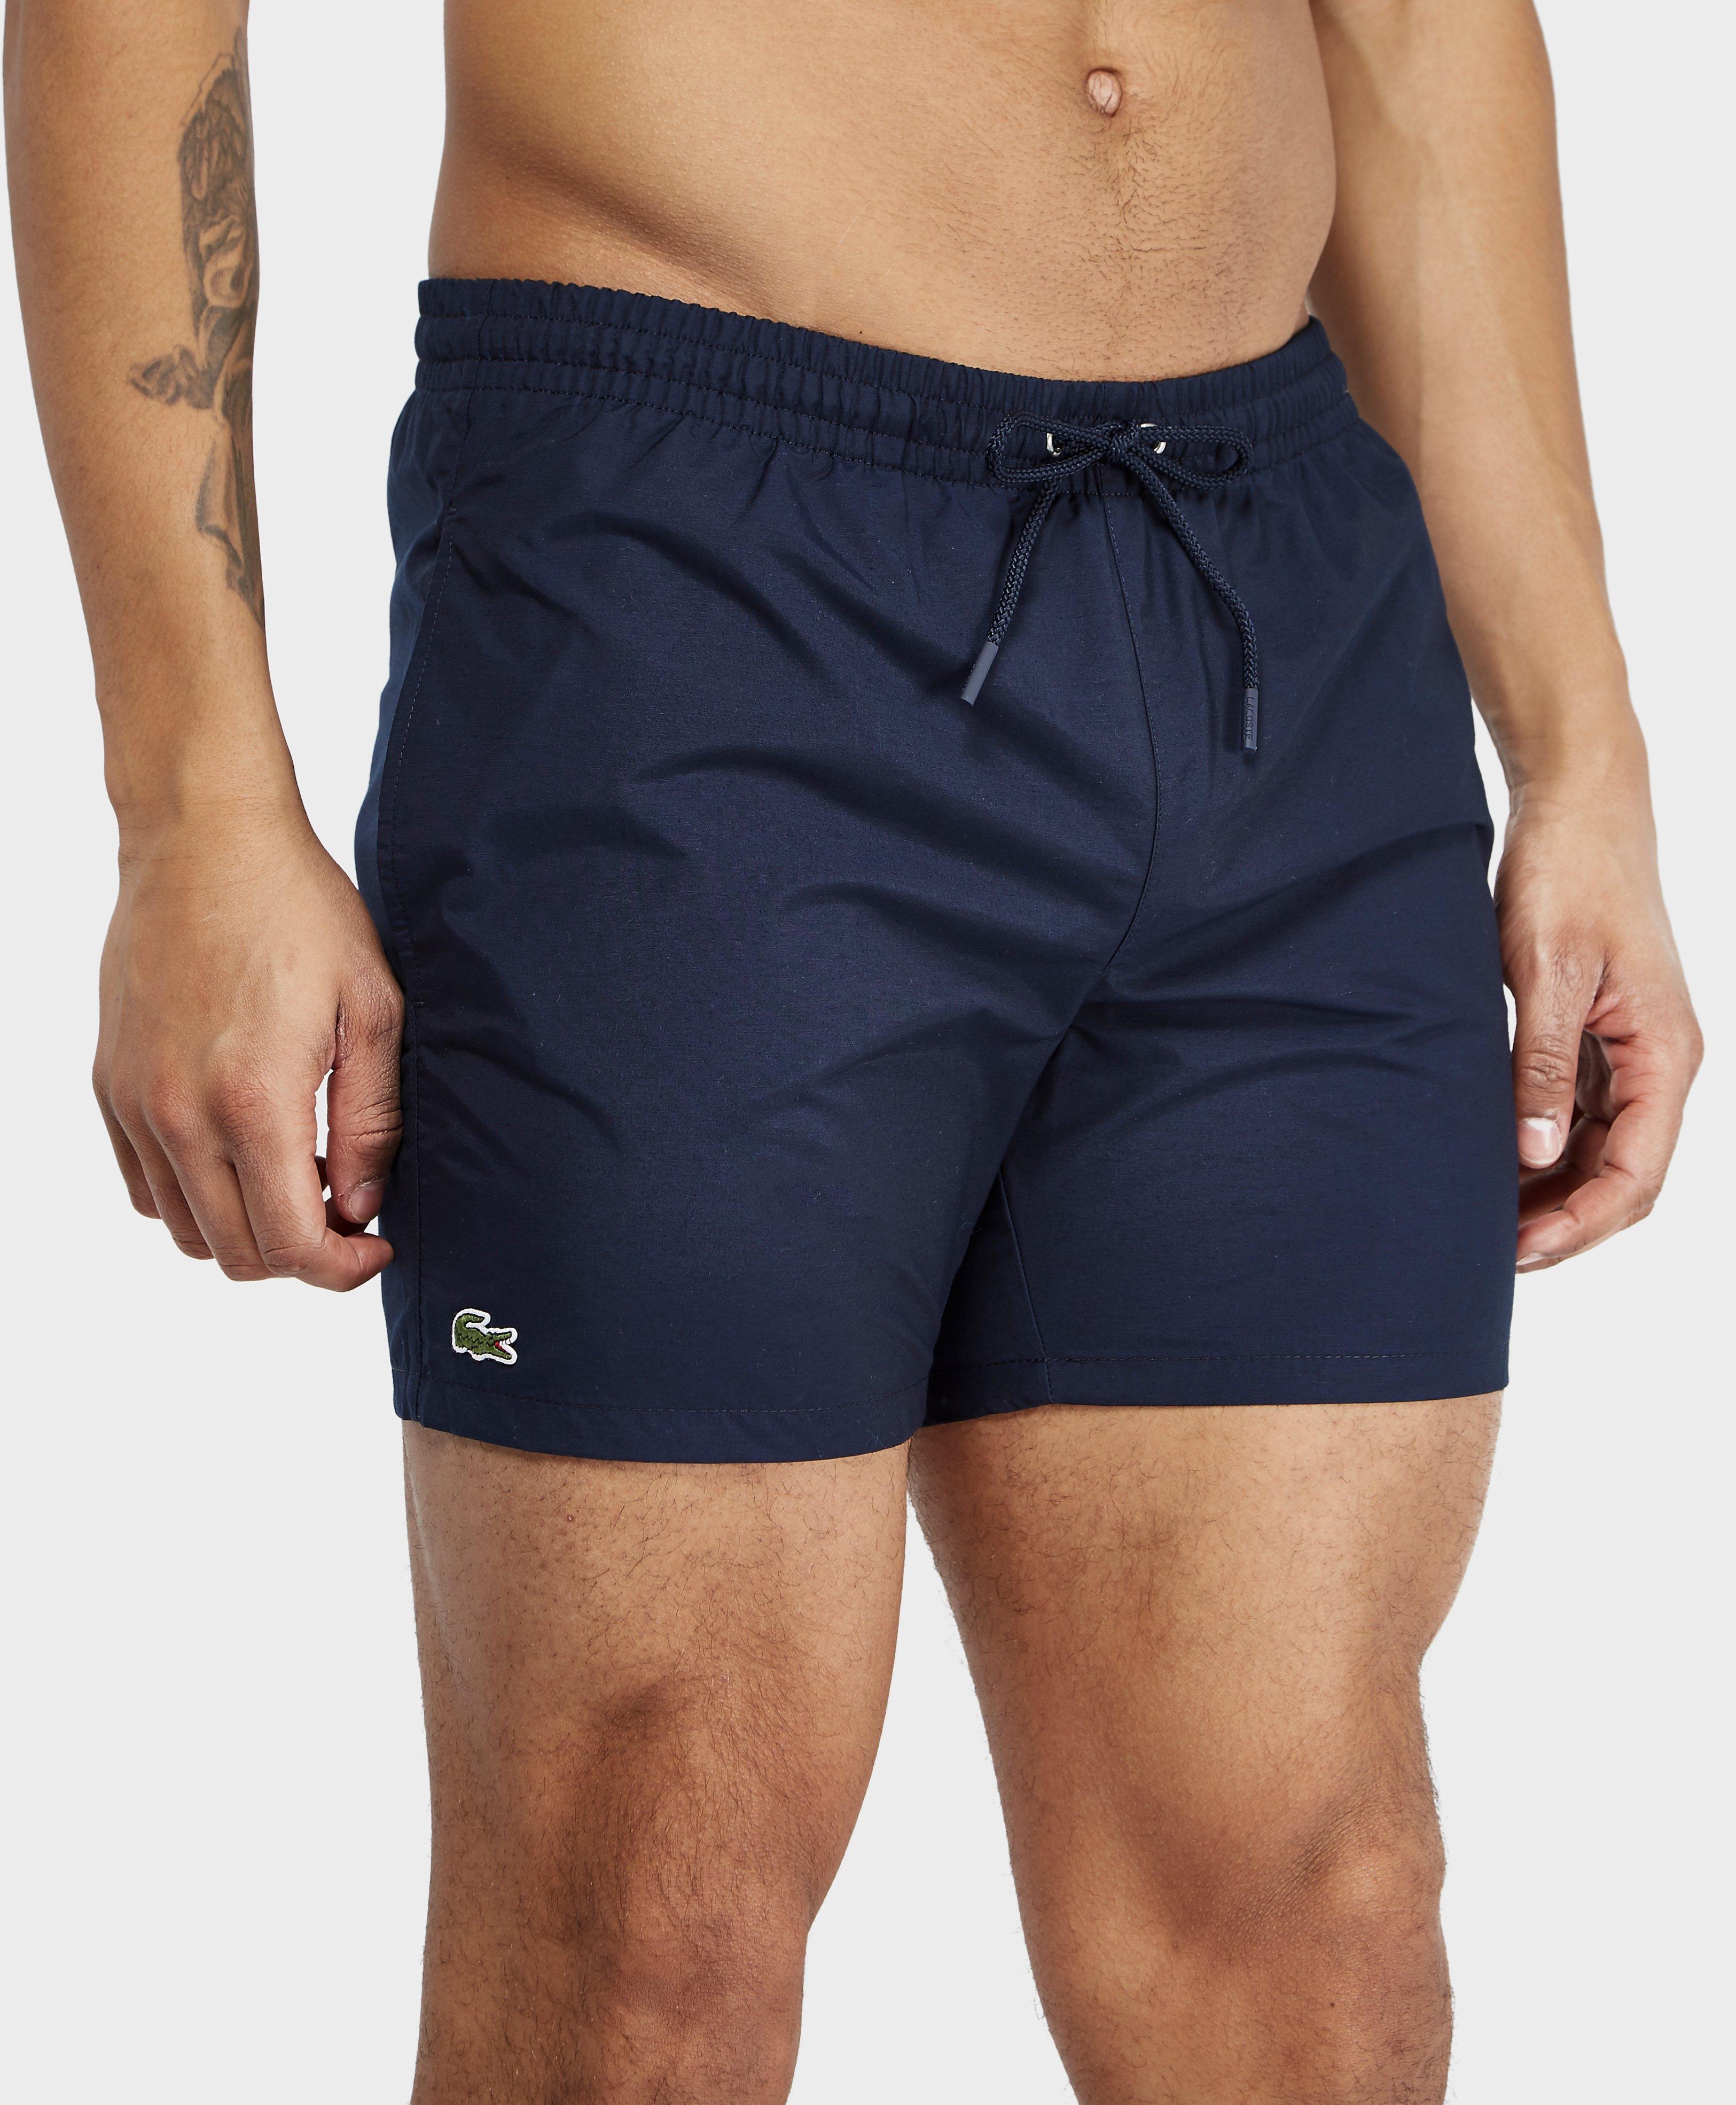 Lacoste Cotton Swim Shorts in Blue for Men - Lyst